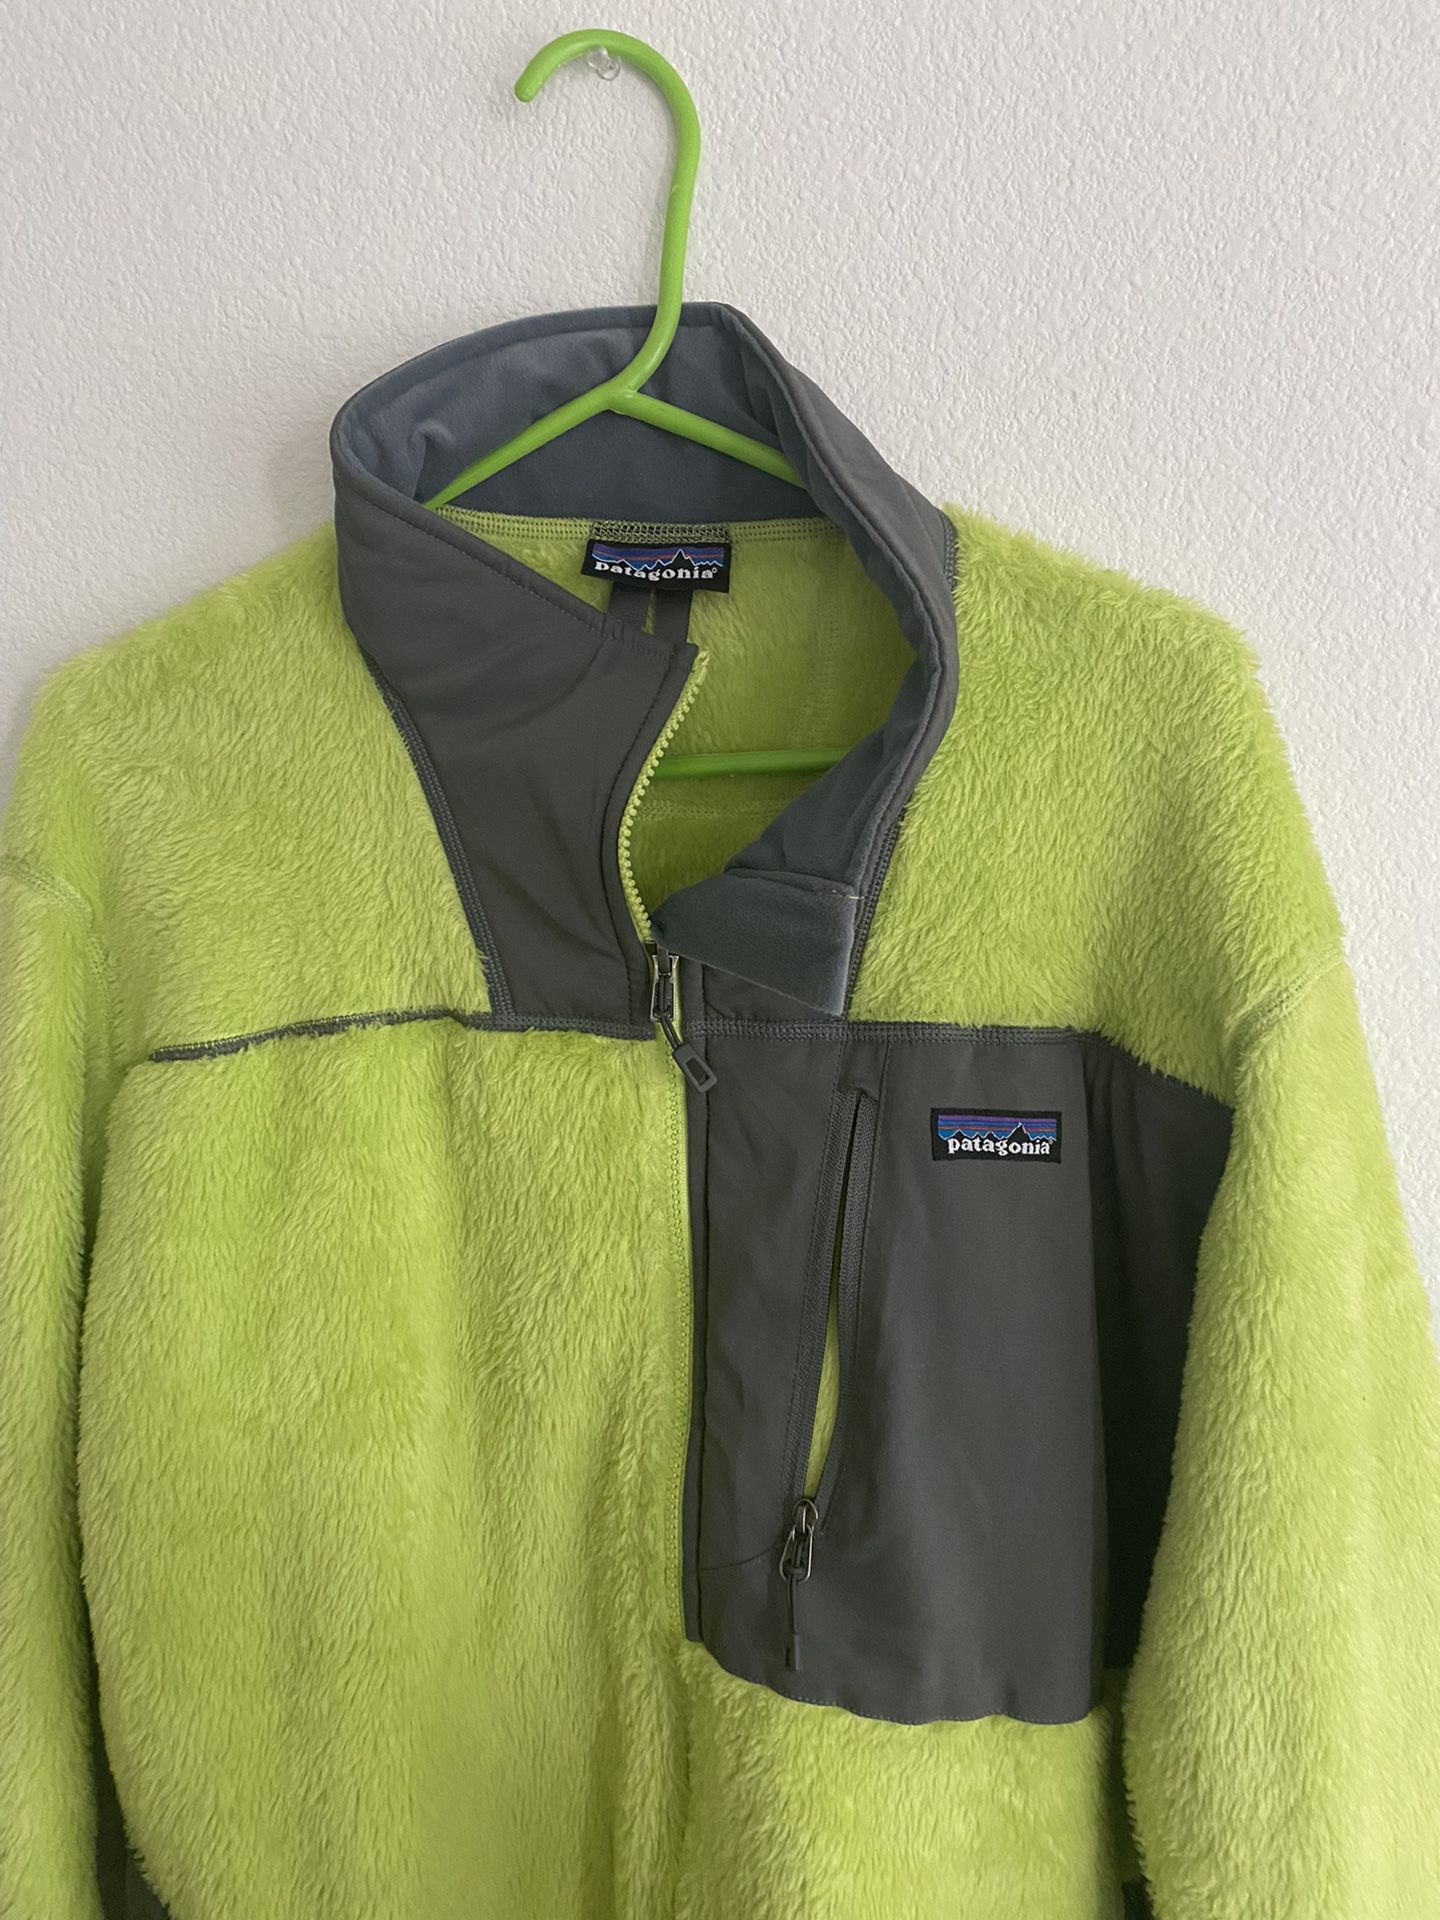 Patagonia Men’s Fleece Jacket New Condition  XL